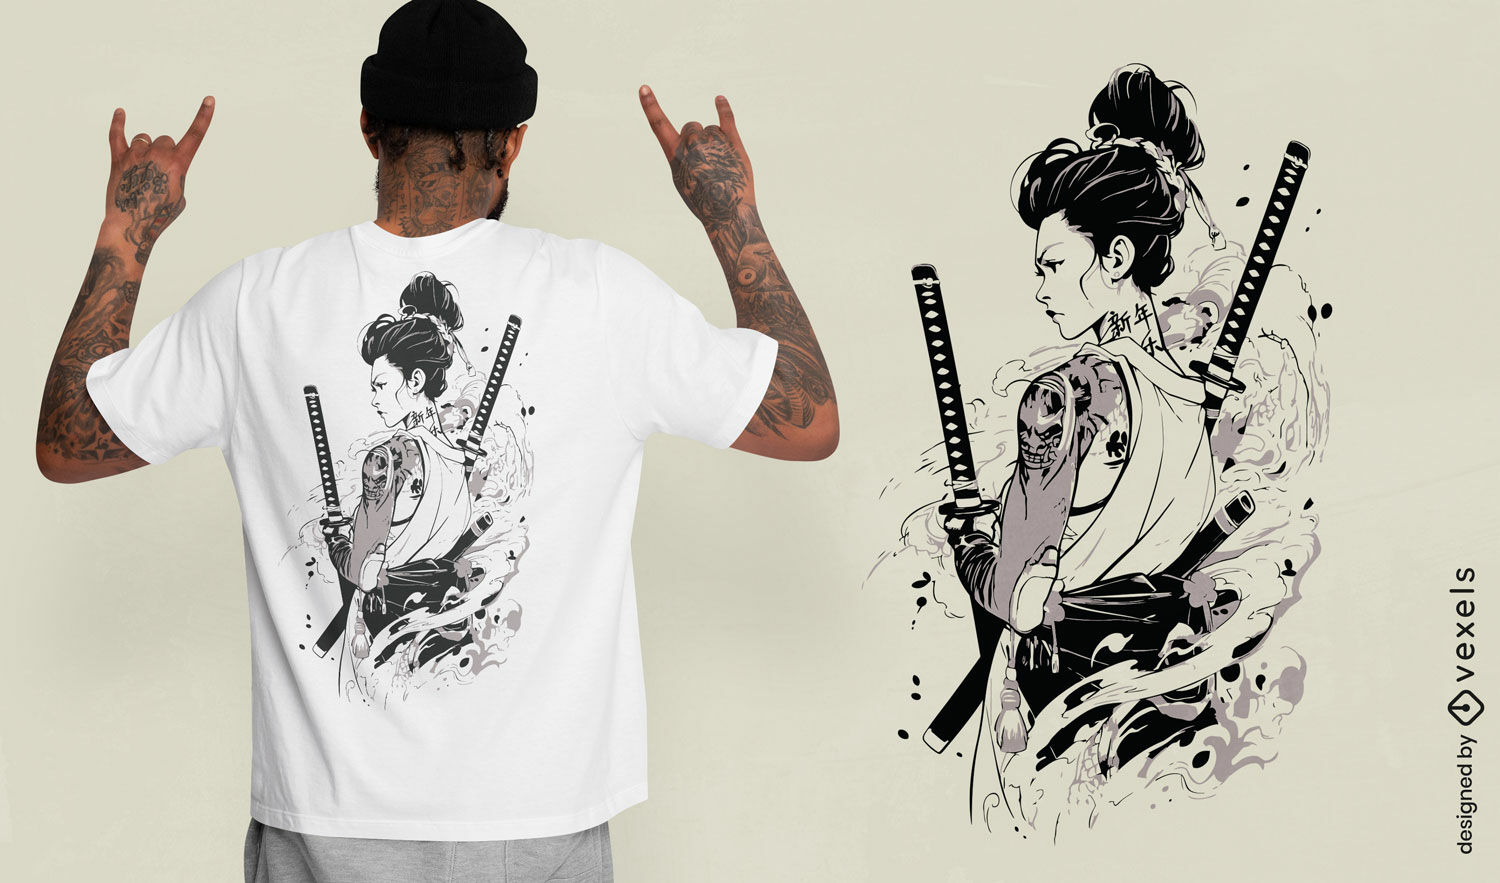 Samurai warrior art t-shirt design